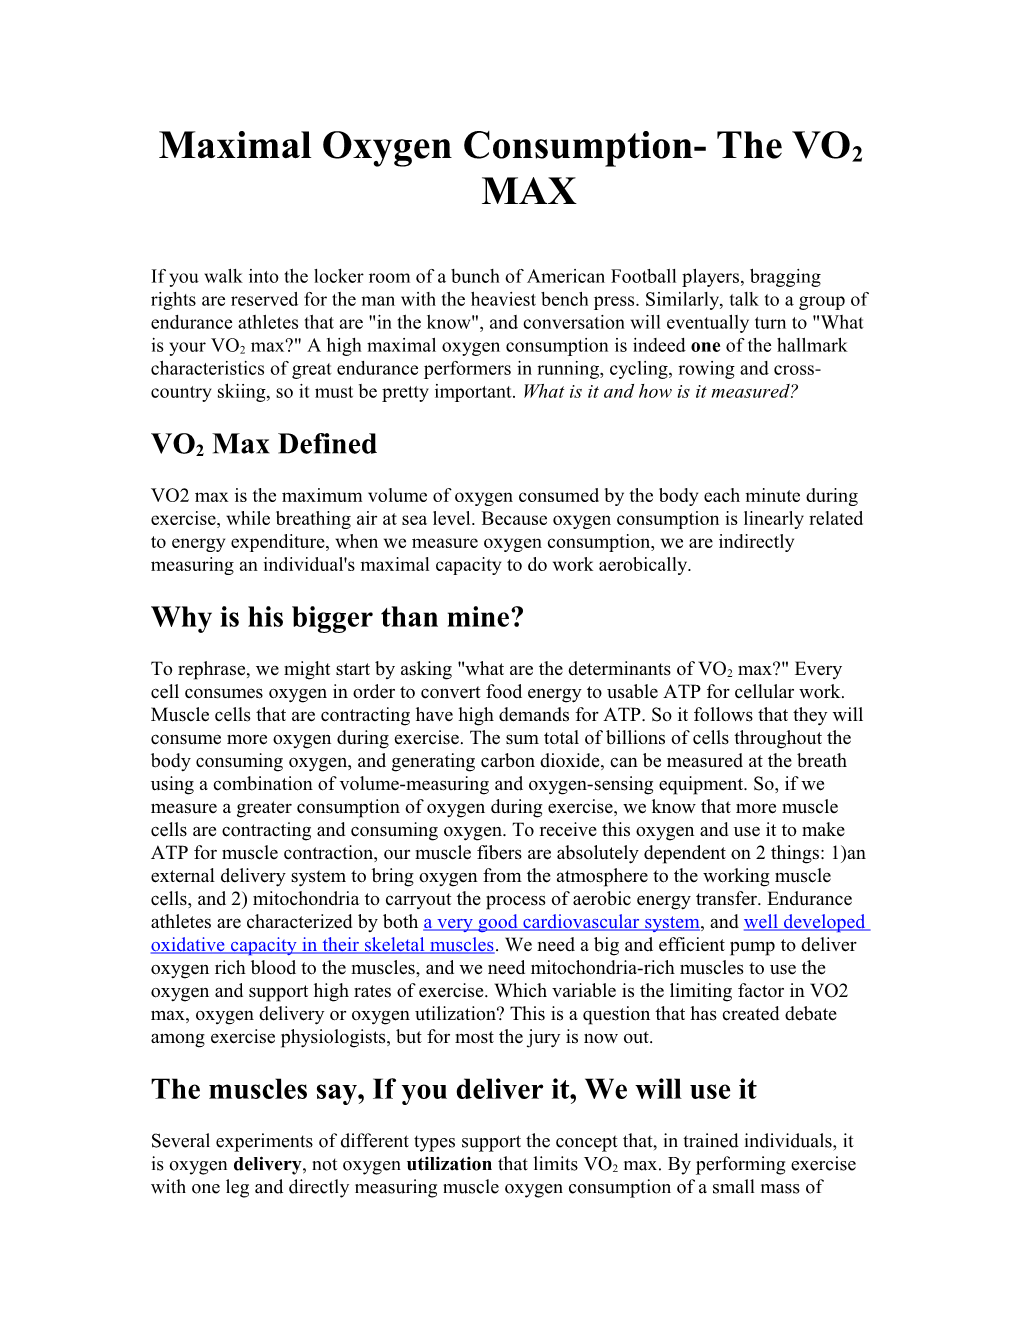 Maximal Oxygen Consumption- the VO2 MAX